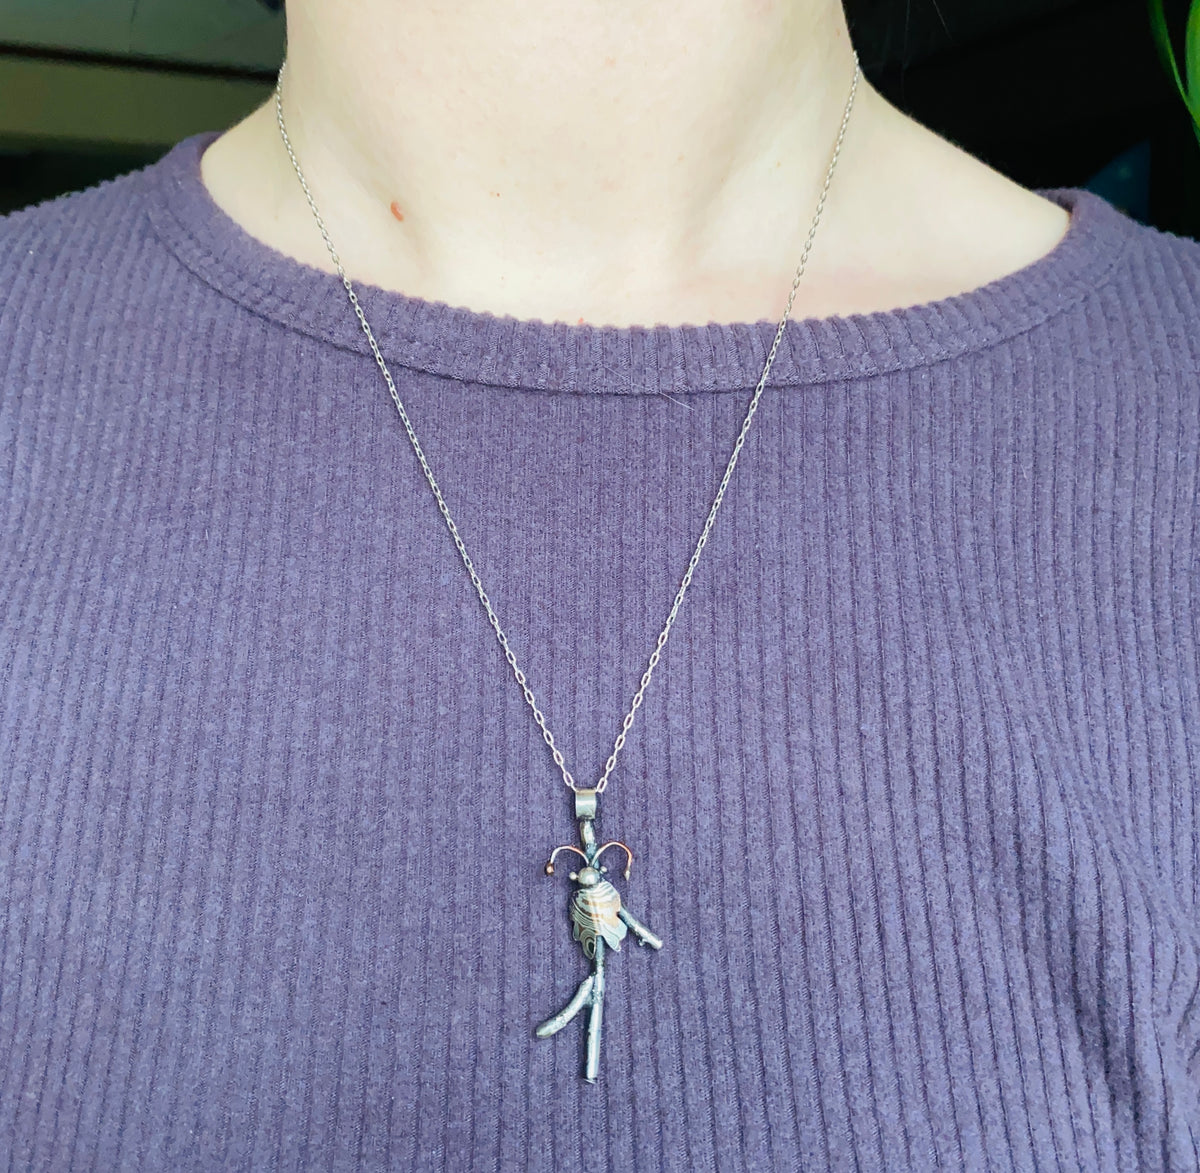 Mokume Gane beetle on twig necklace